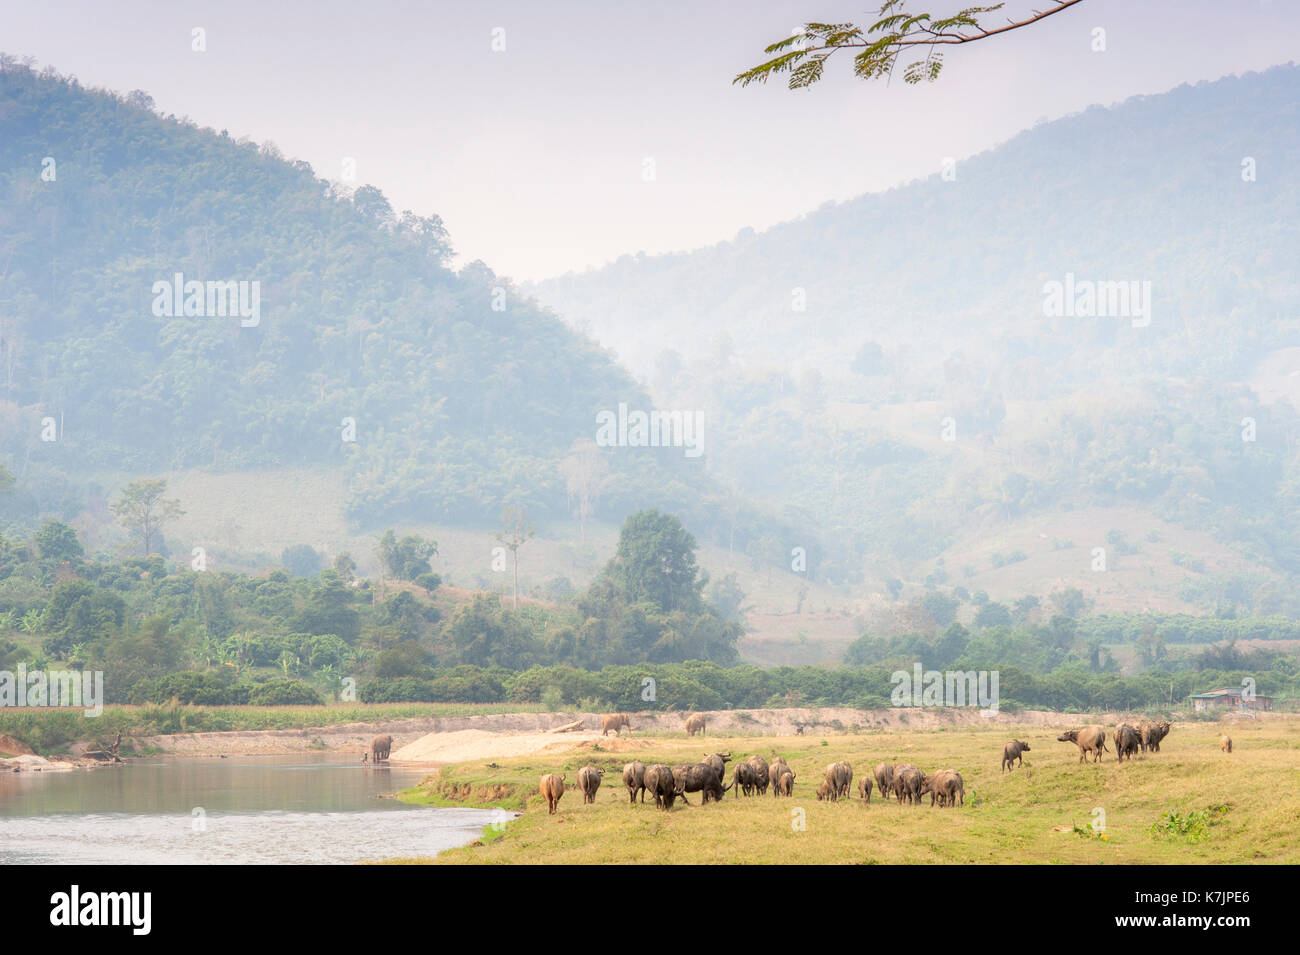 Asian Elephants am Mae Taeng Fluss in einem Elefanten-Rettungs- und Rehabilitationszentrum. Elephant Nature Park, Chiang Mai Provinz, Thailand Stockfoto